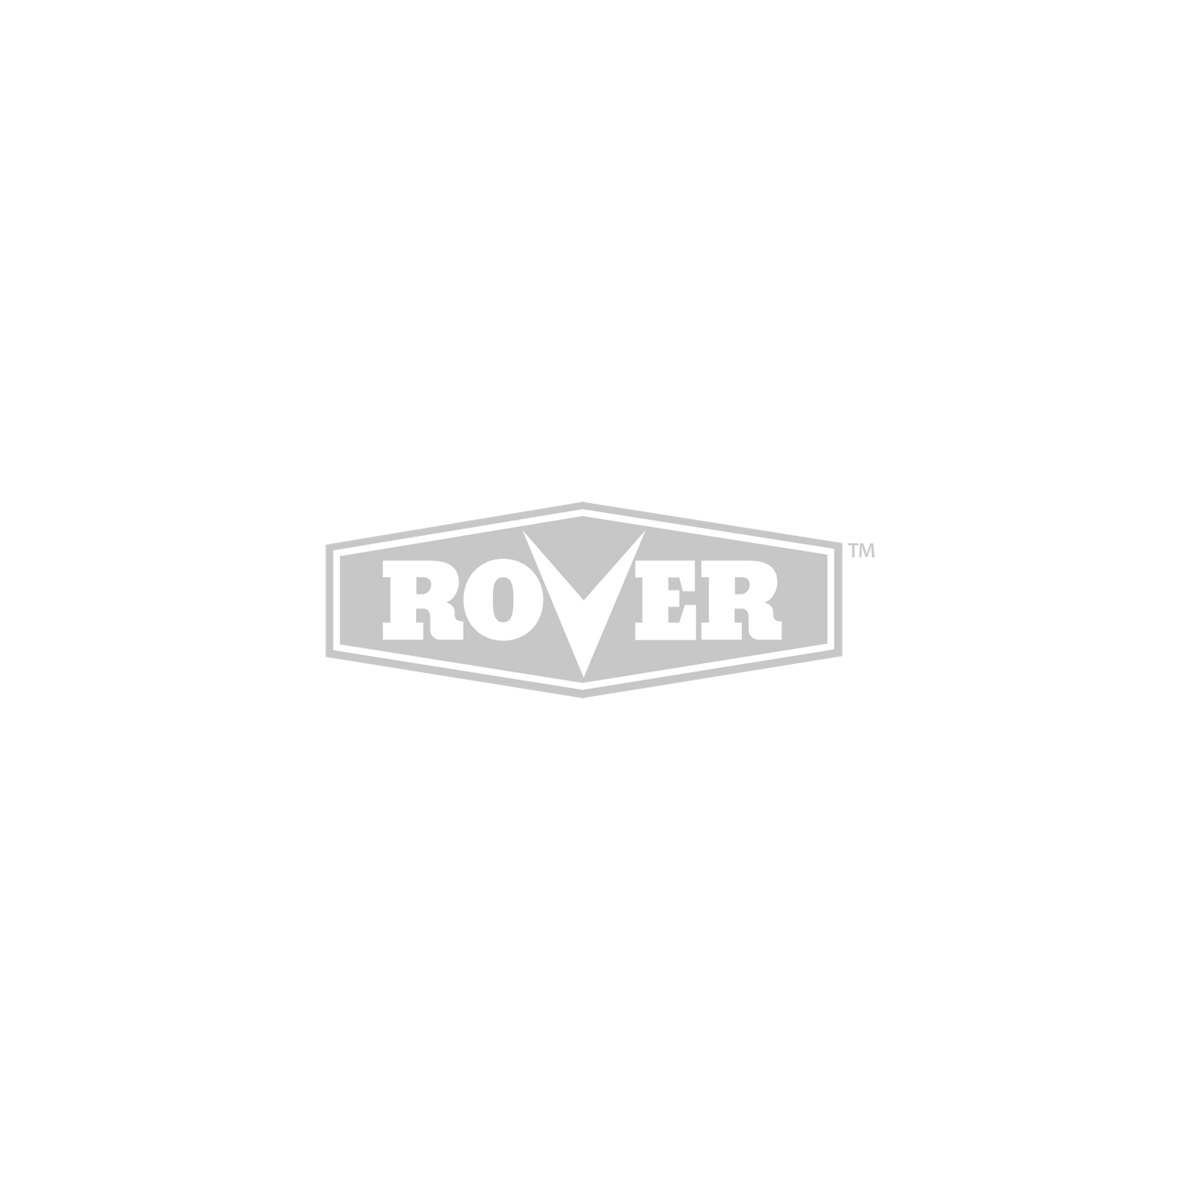 Blades - Rover B04T & Rover Utility Mower